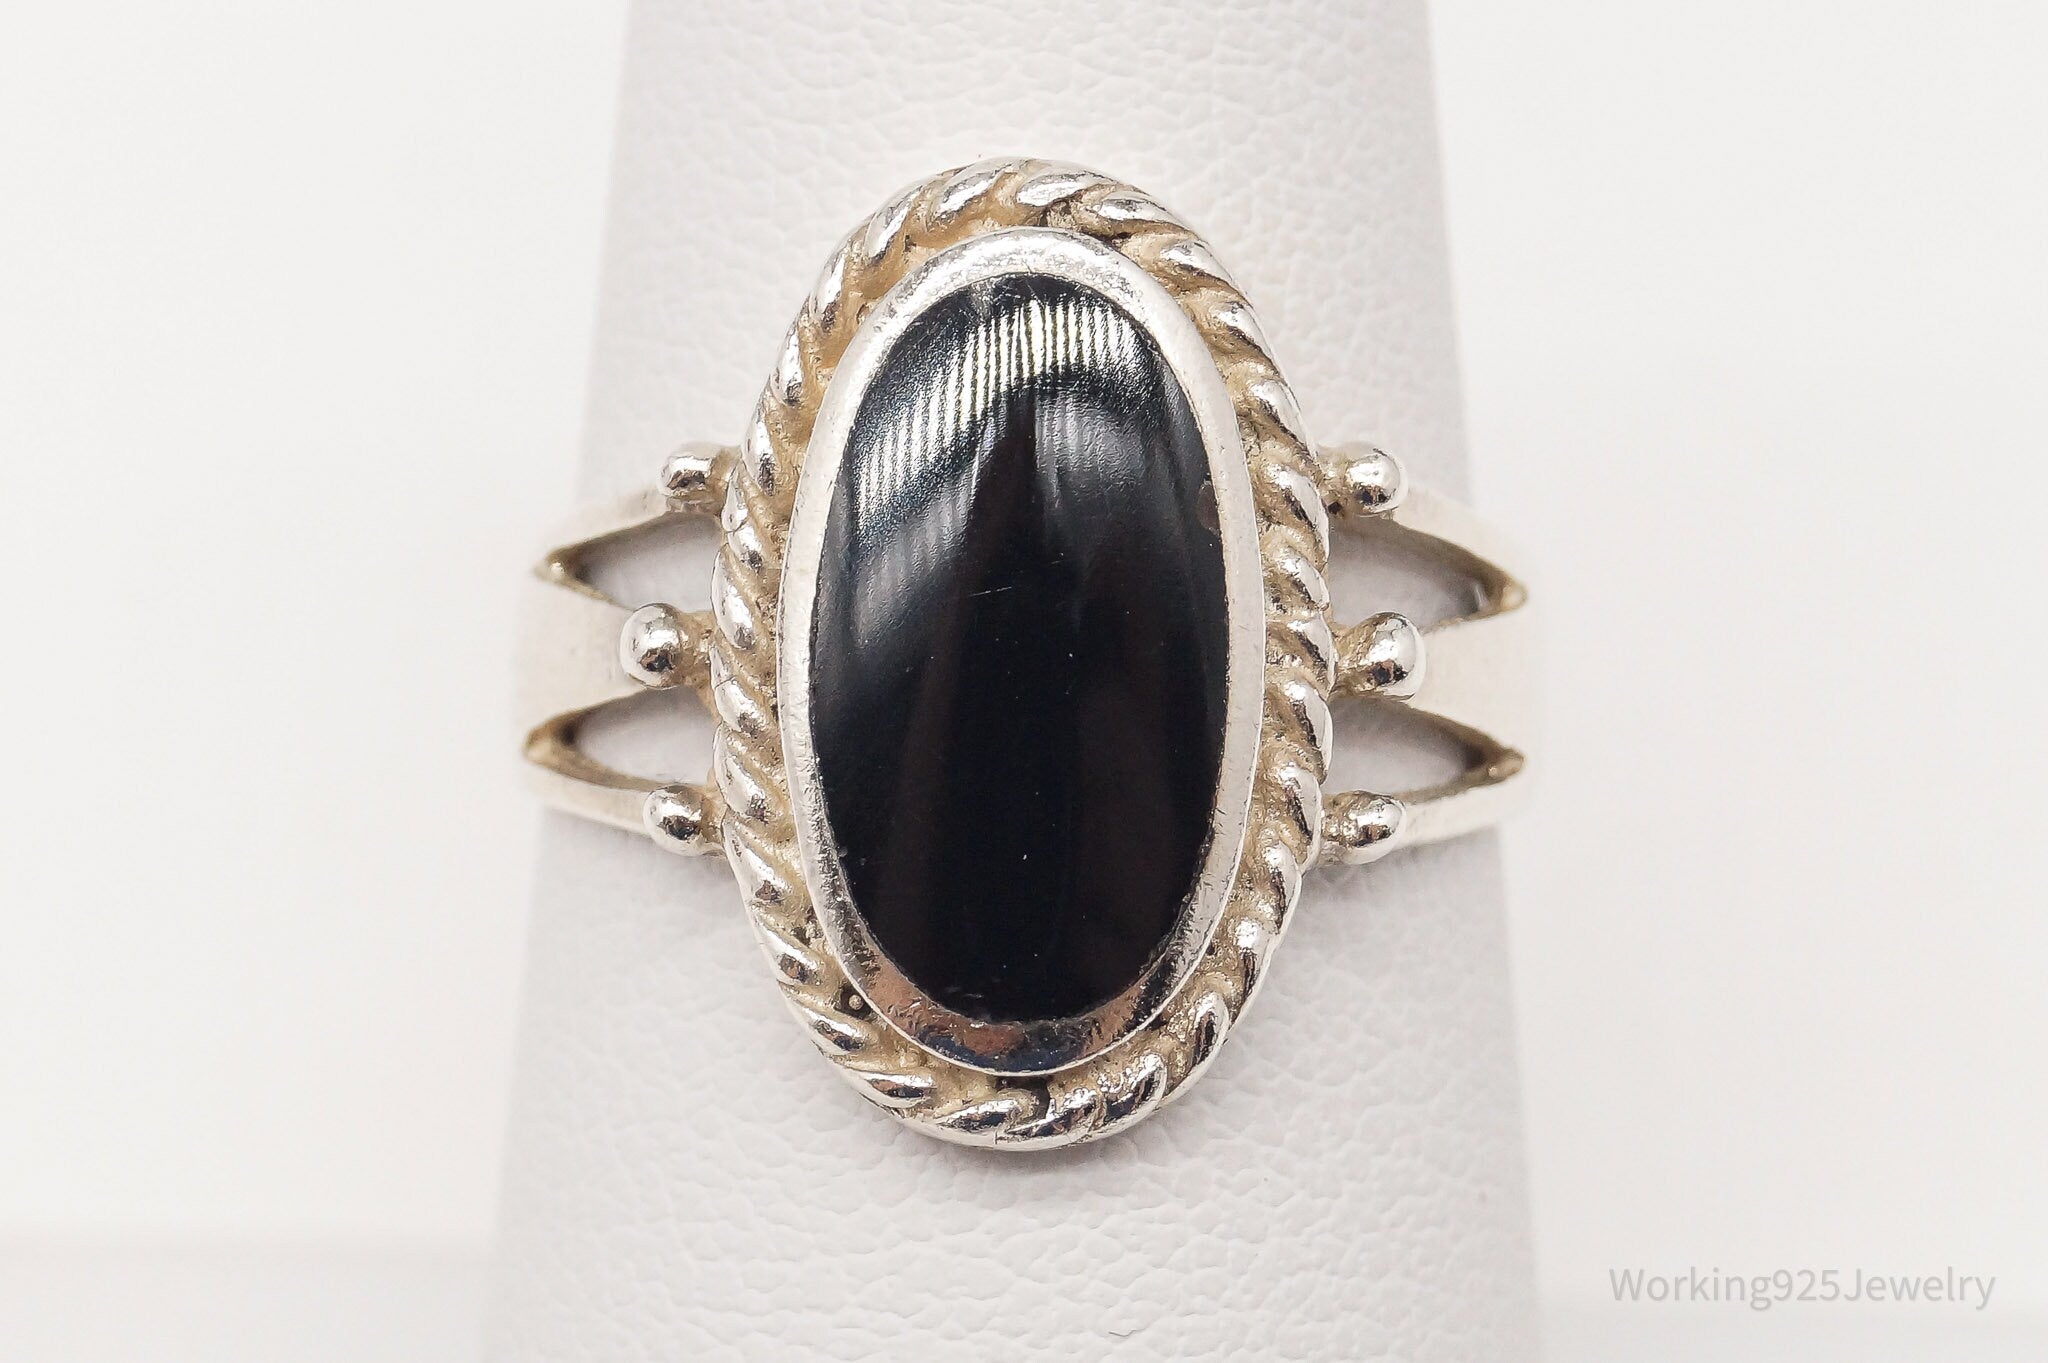 Vintage Southwestern Style Black Onyx Sterling Silver Ring Size 6.75